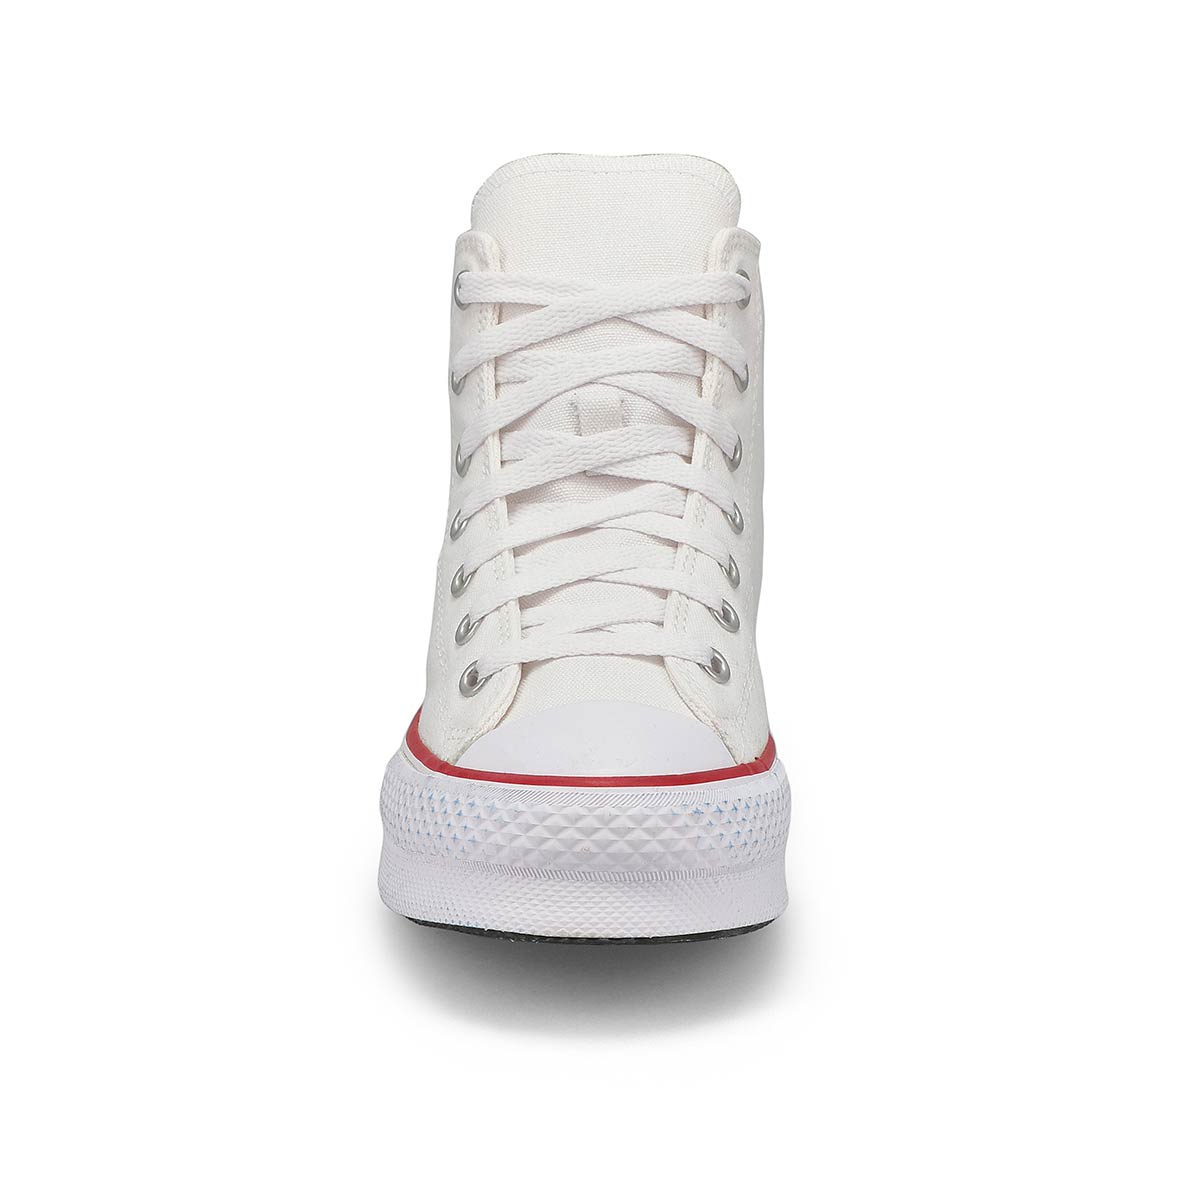 Kids' Chuck Taylor All Star Eva Lift Hi Top Platform Sneaker - White/Black